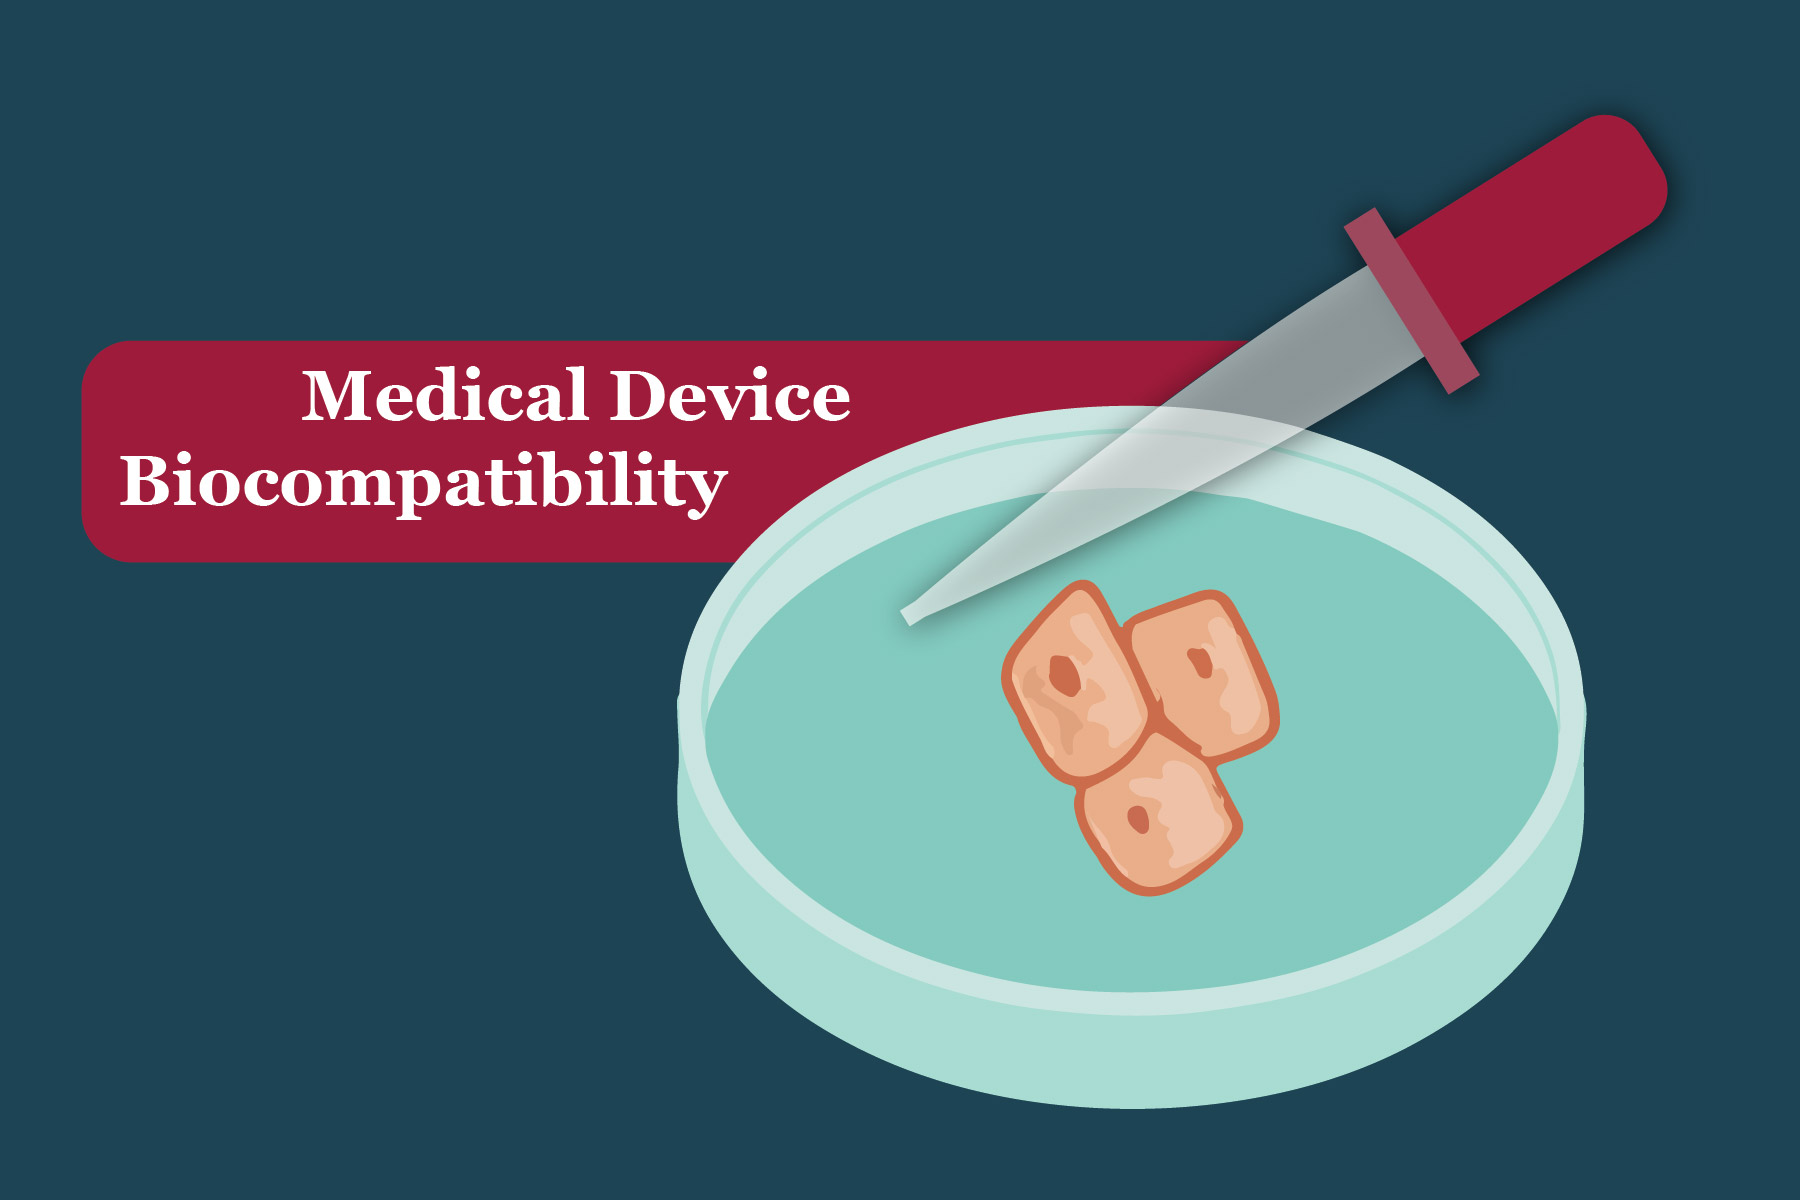 Medical Device Biocompatibility